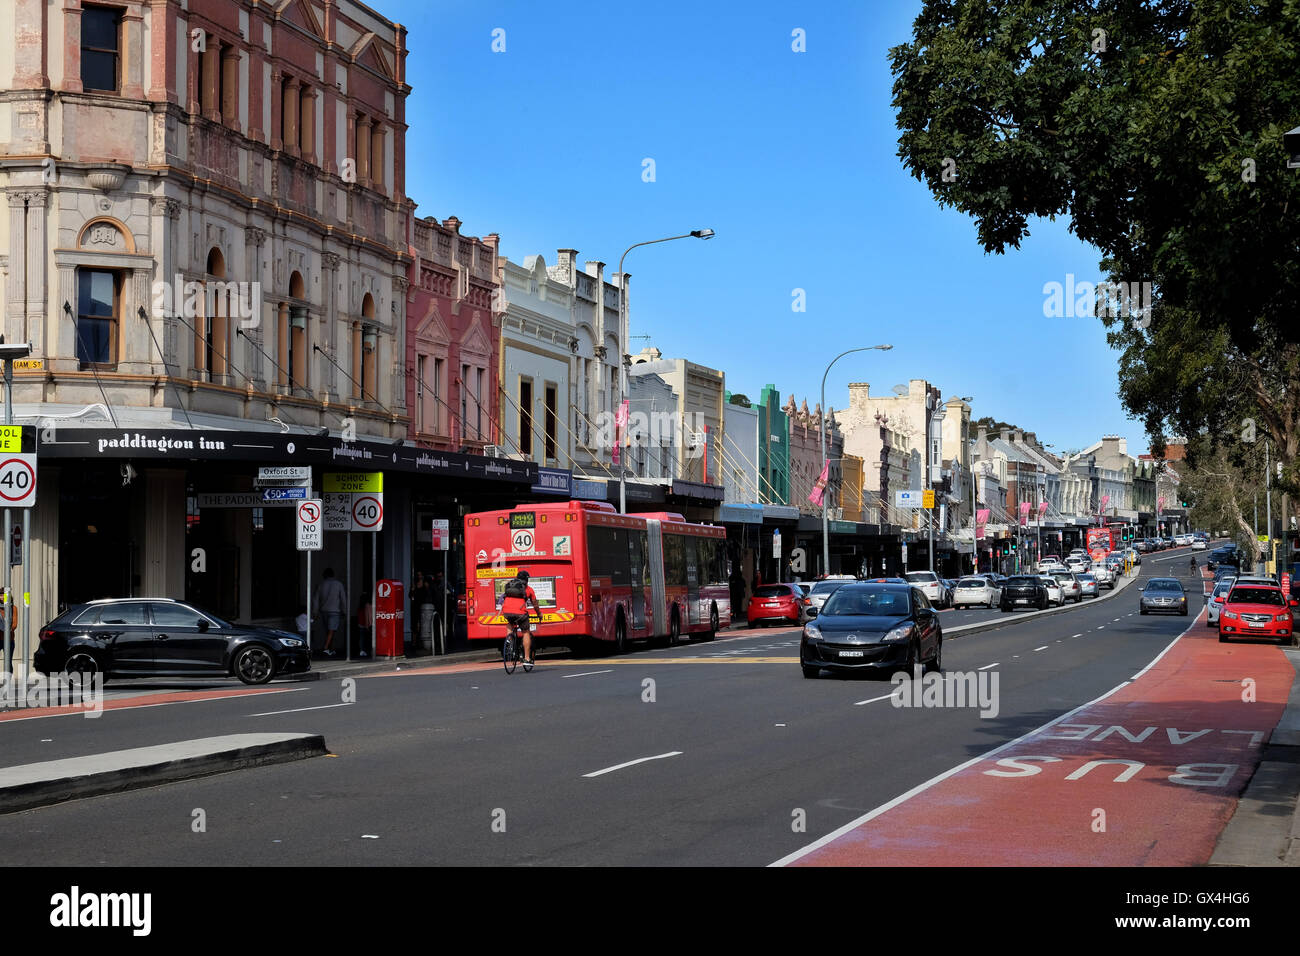 Oxford street Paddington Sydney Australia 2016 Stock Photo